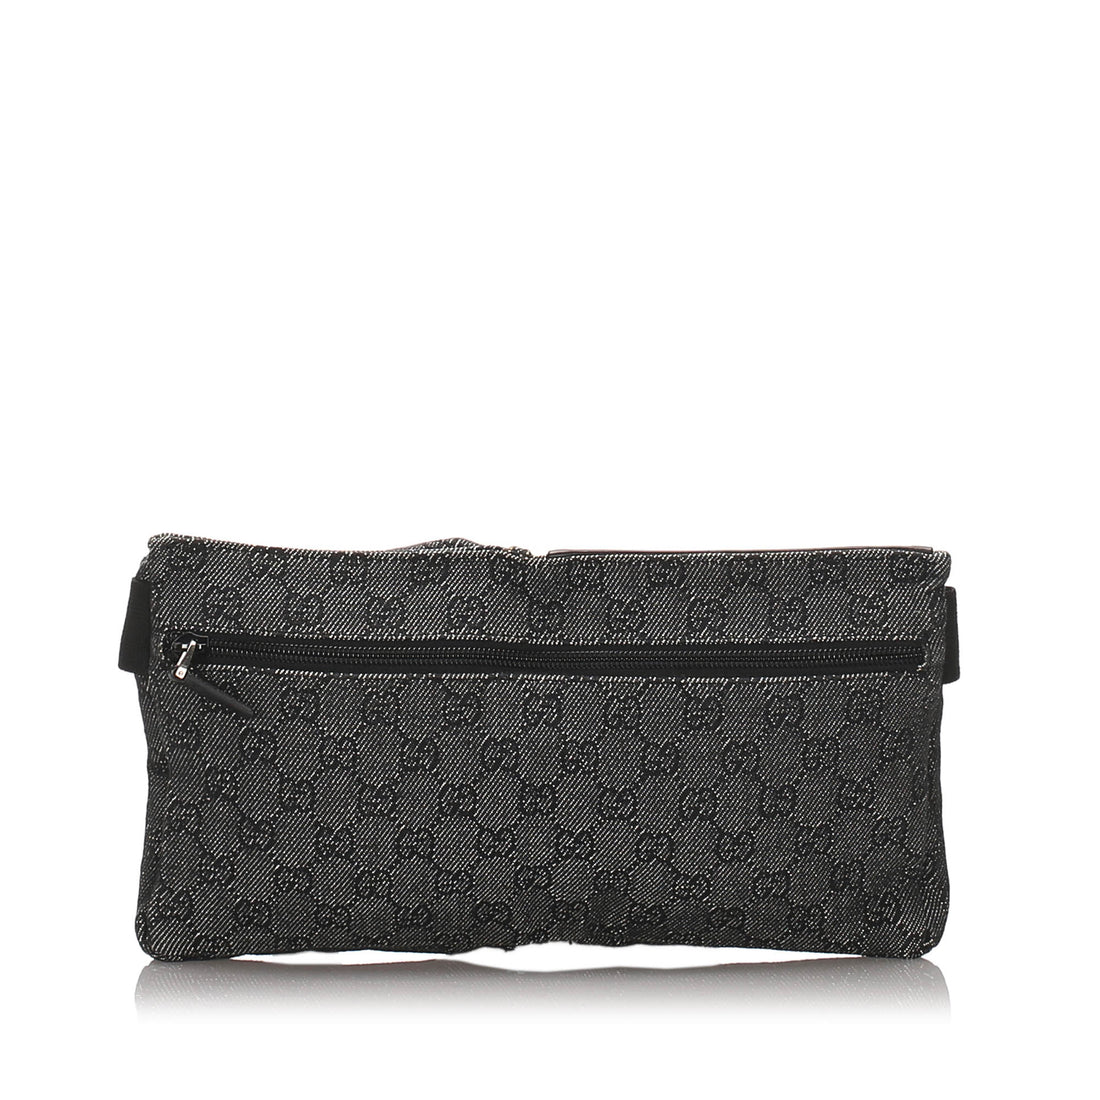 Gucci Black GG Monogram Waist Fanny Pack Belt Bag